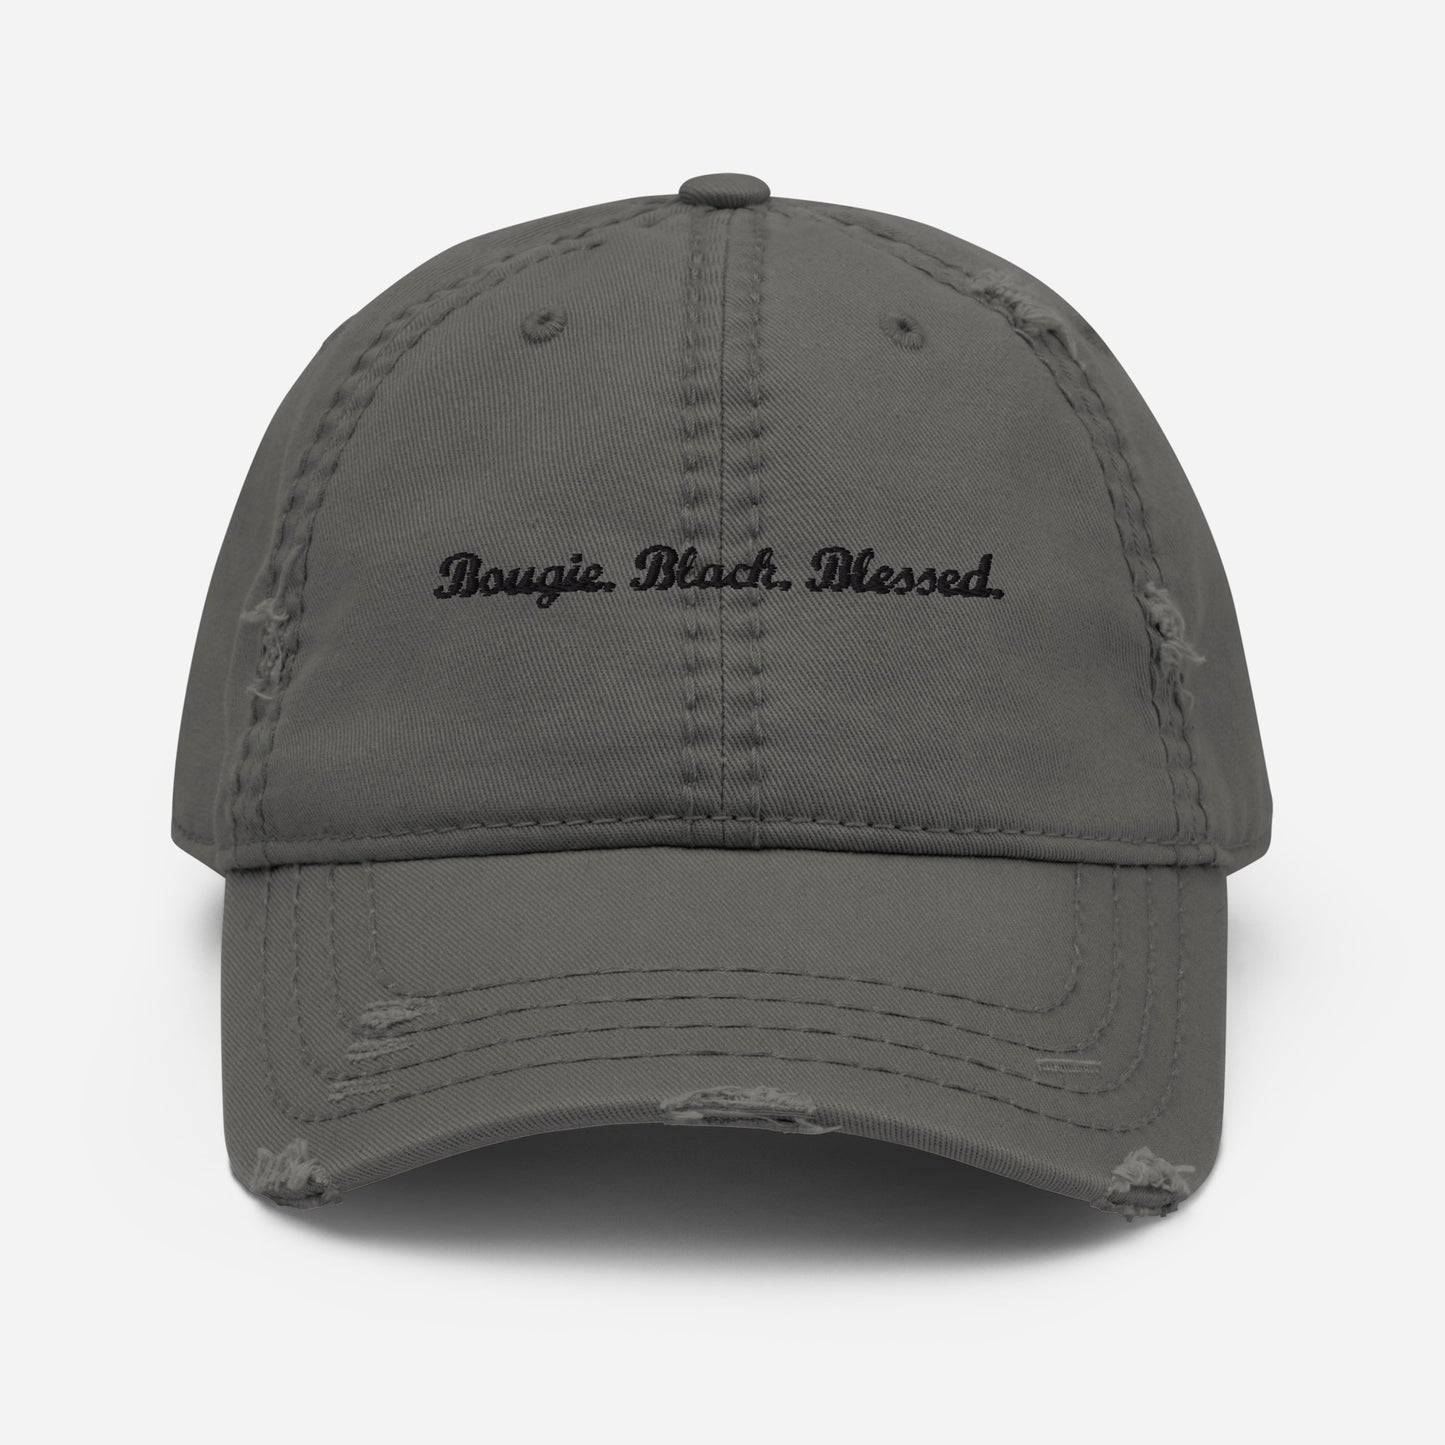 Bougie. Black. Blessed. Distressed Dad Hat